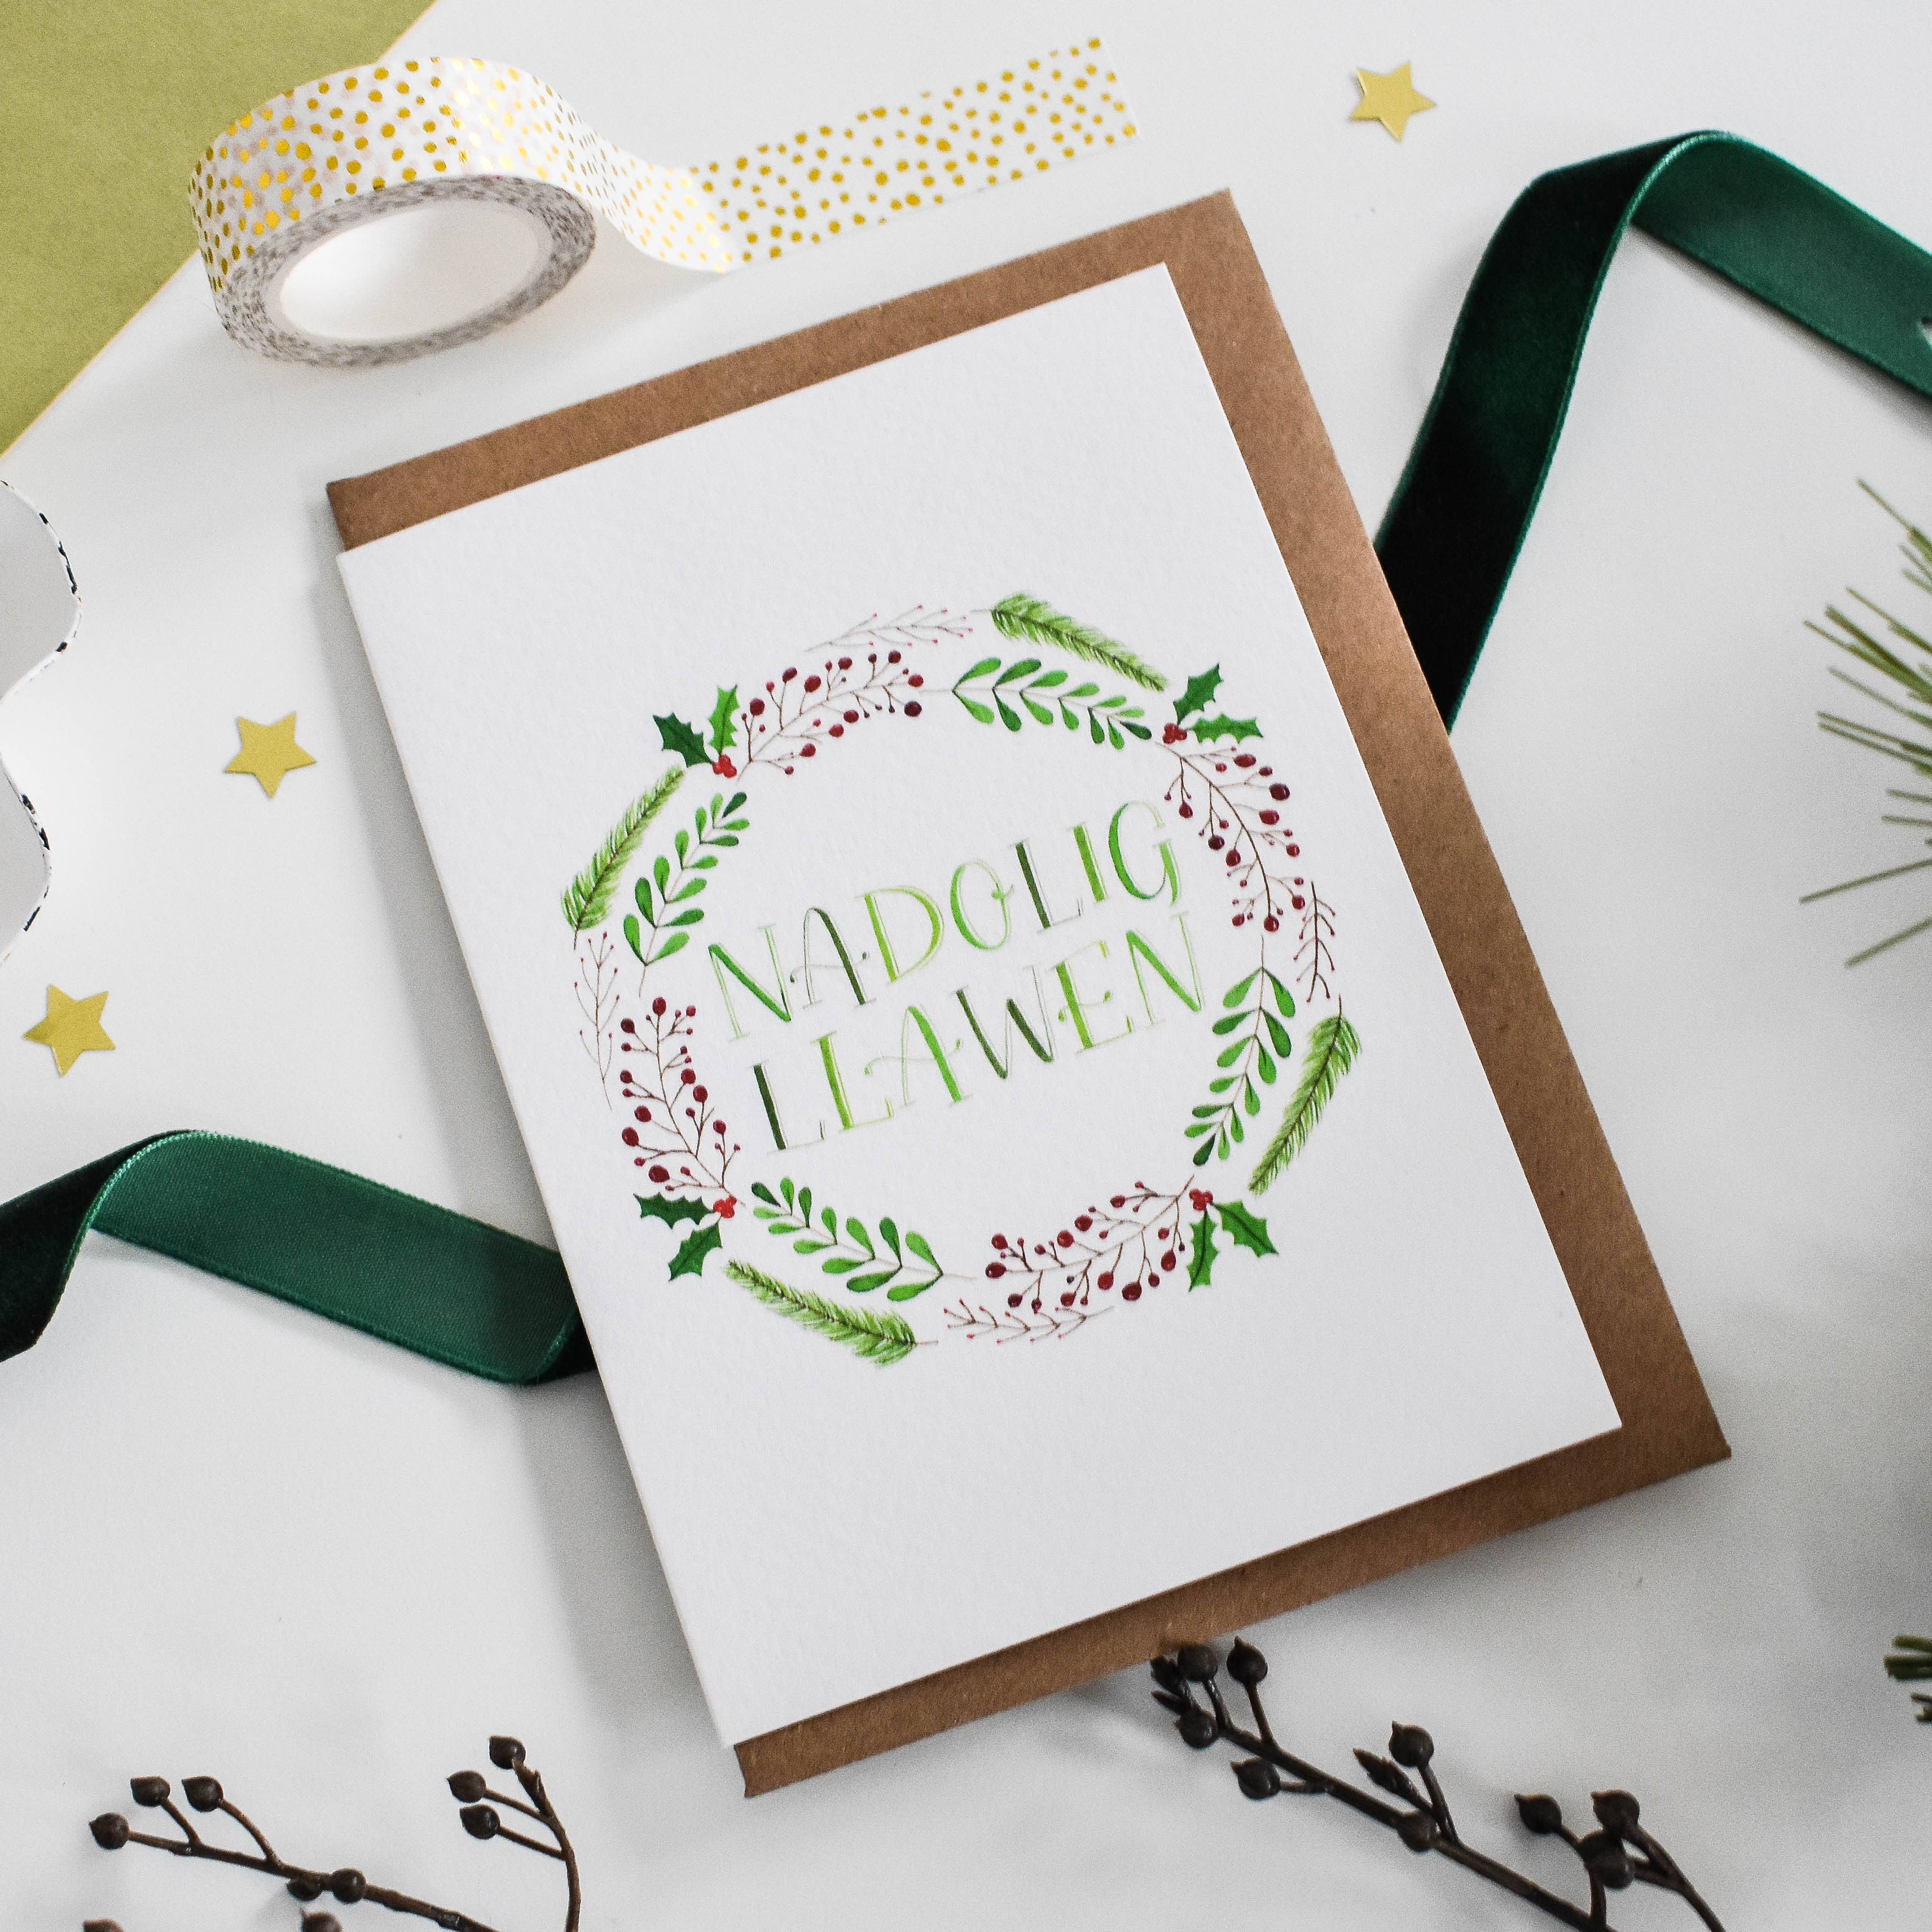 Eleri Haf Designs - Welsh Christmas Greeting Card - Nadolig Llawen